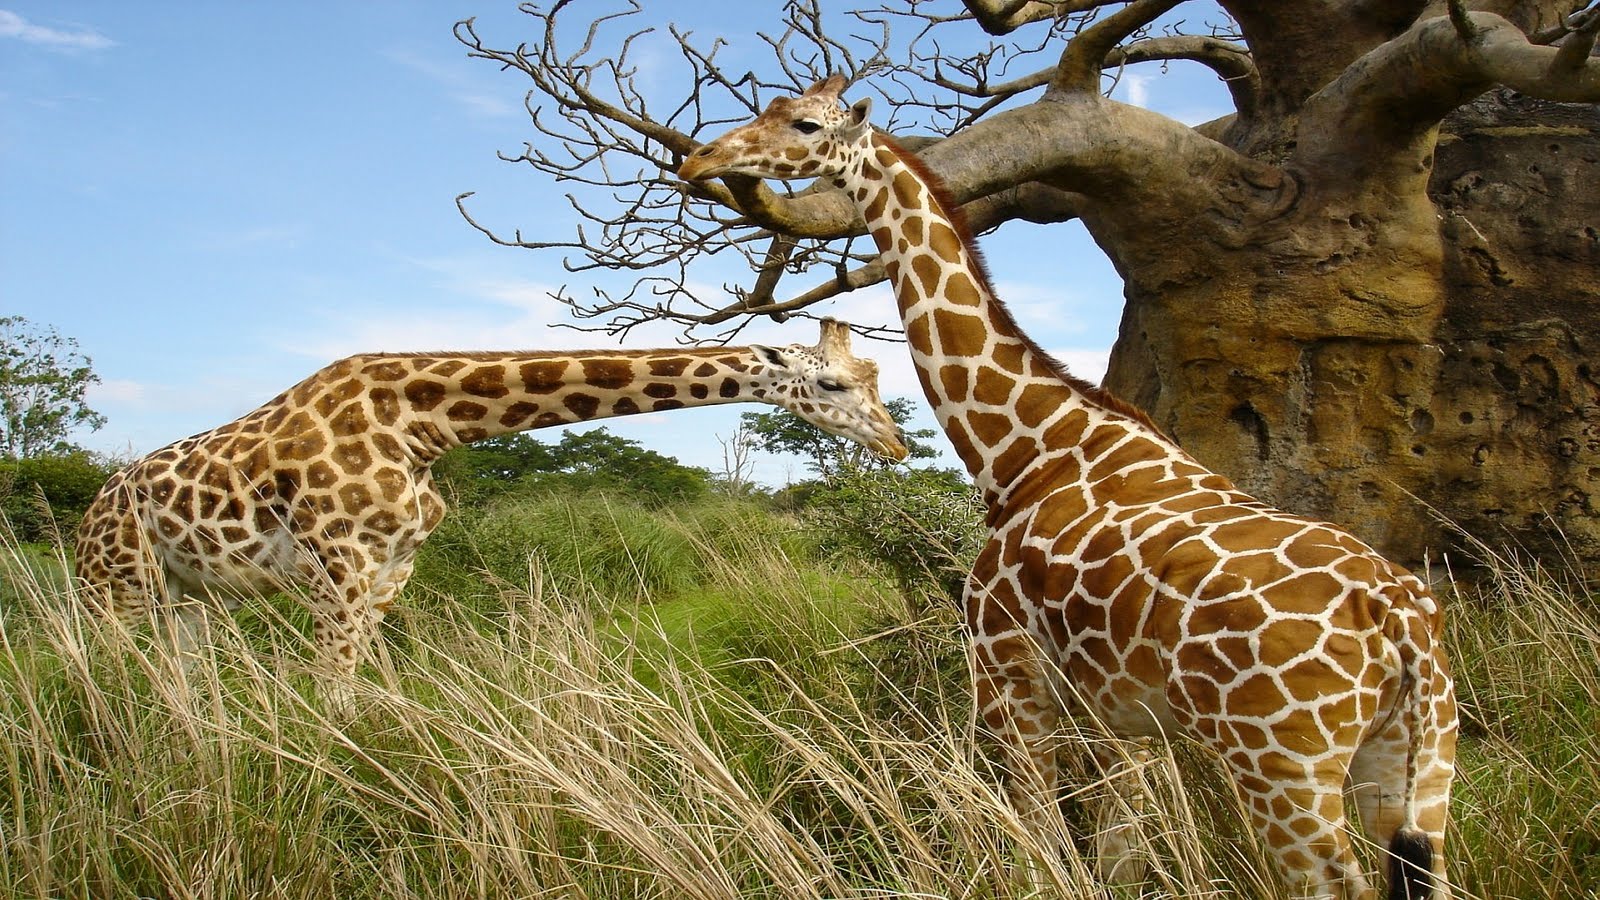 http://1.bp.blogspot.com/-AhFO5Ve8rU0/TlPghLGVyGI/AAAAAAAALoY/yPsWHYaV5yI/s1600/Animales-Salvajes-girafas_01.jpg